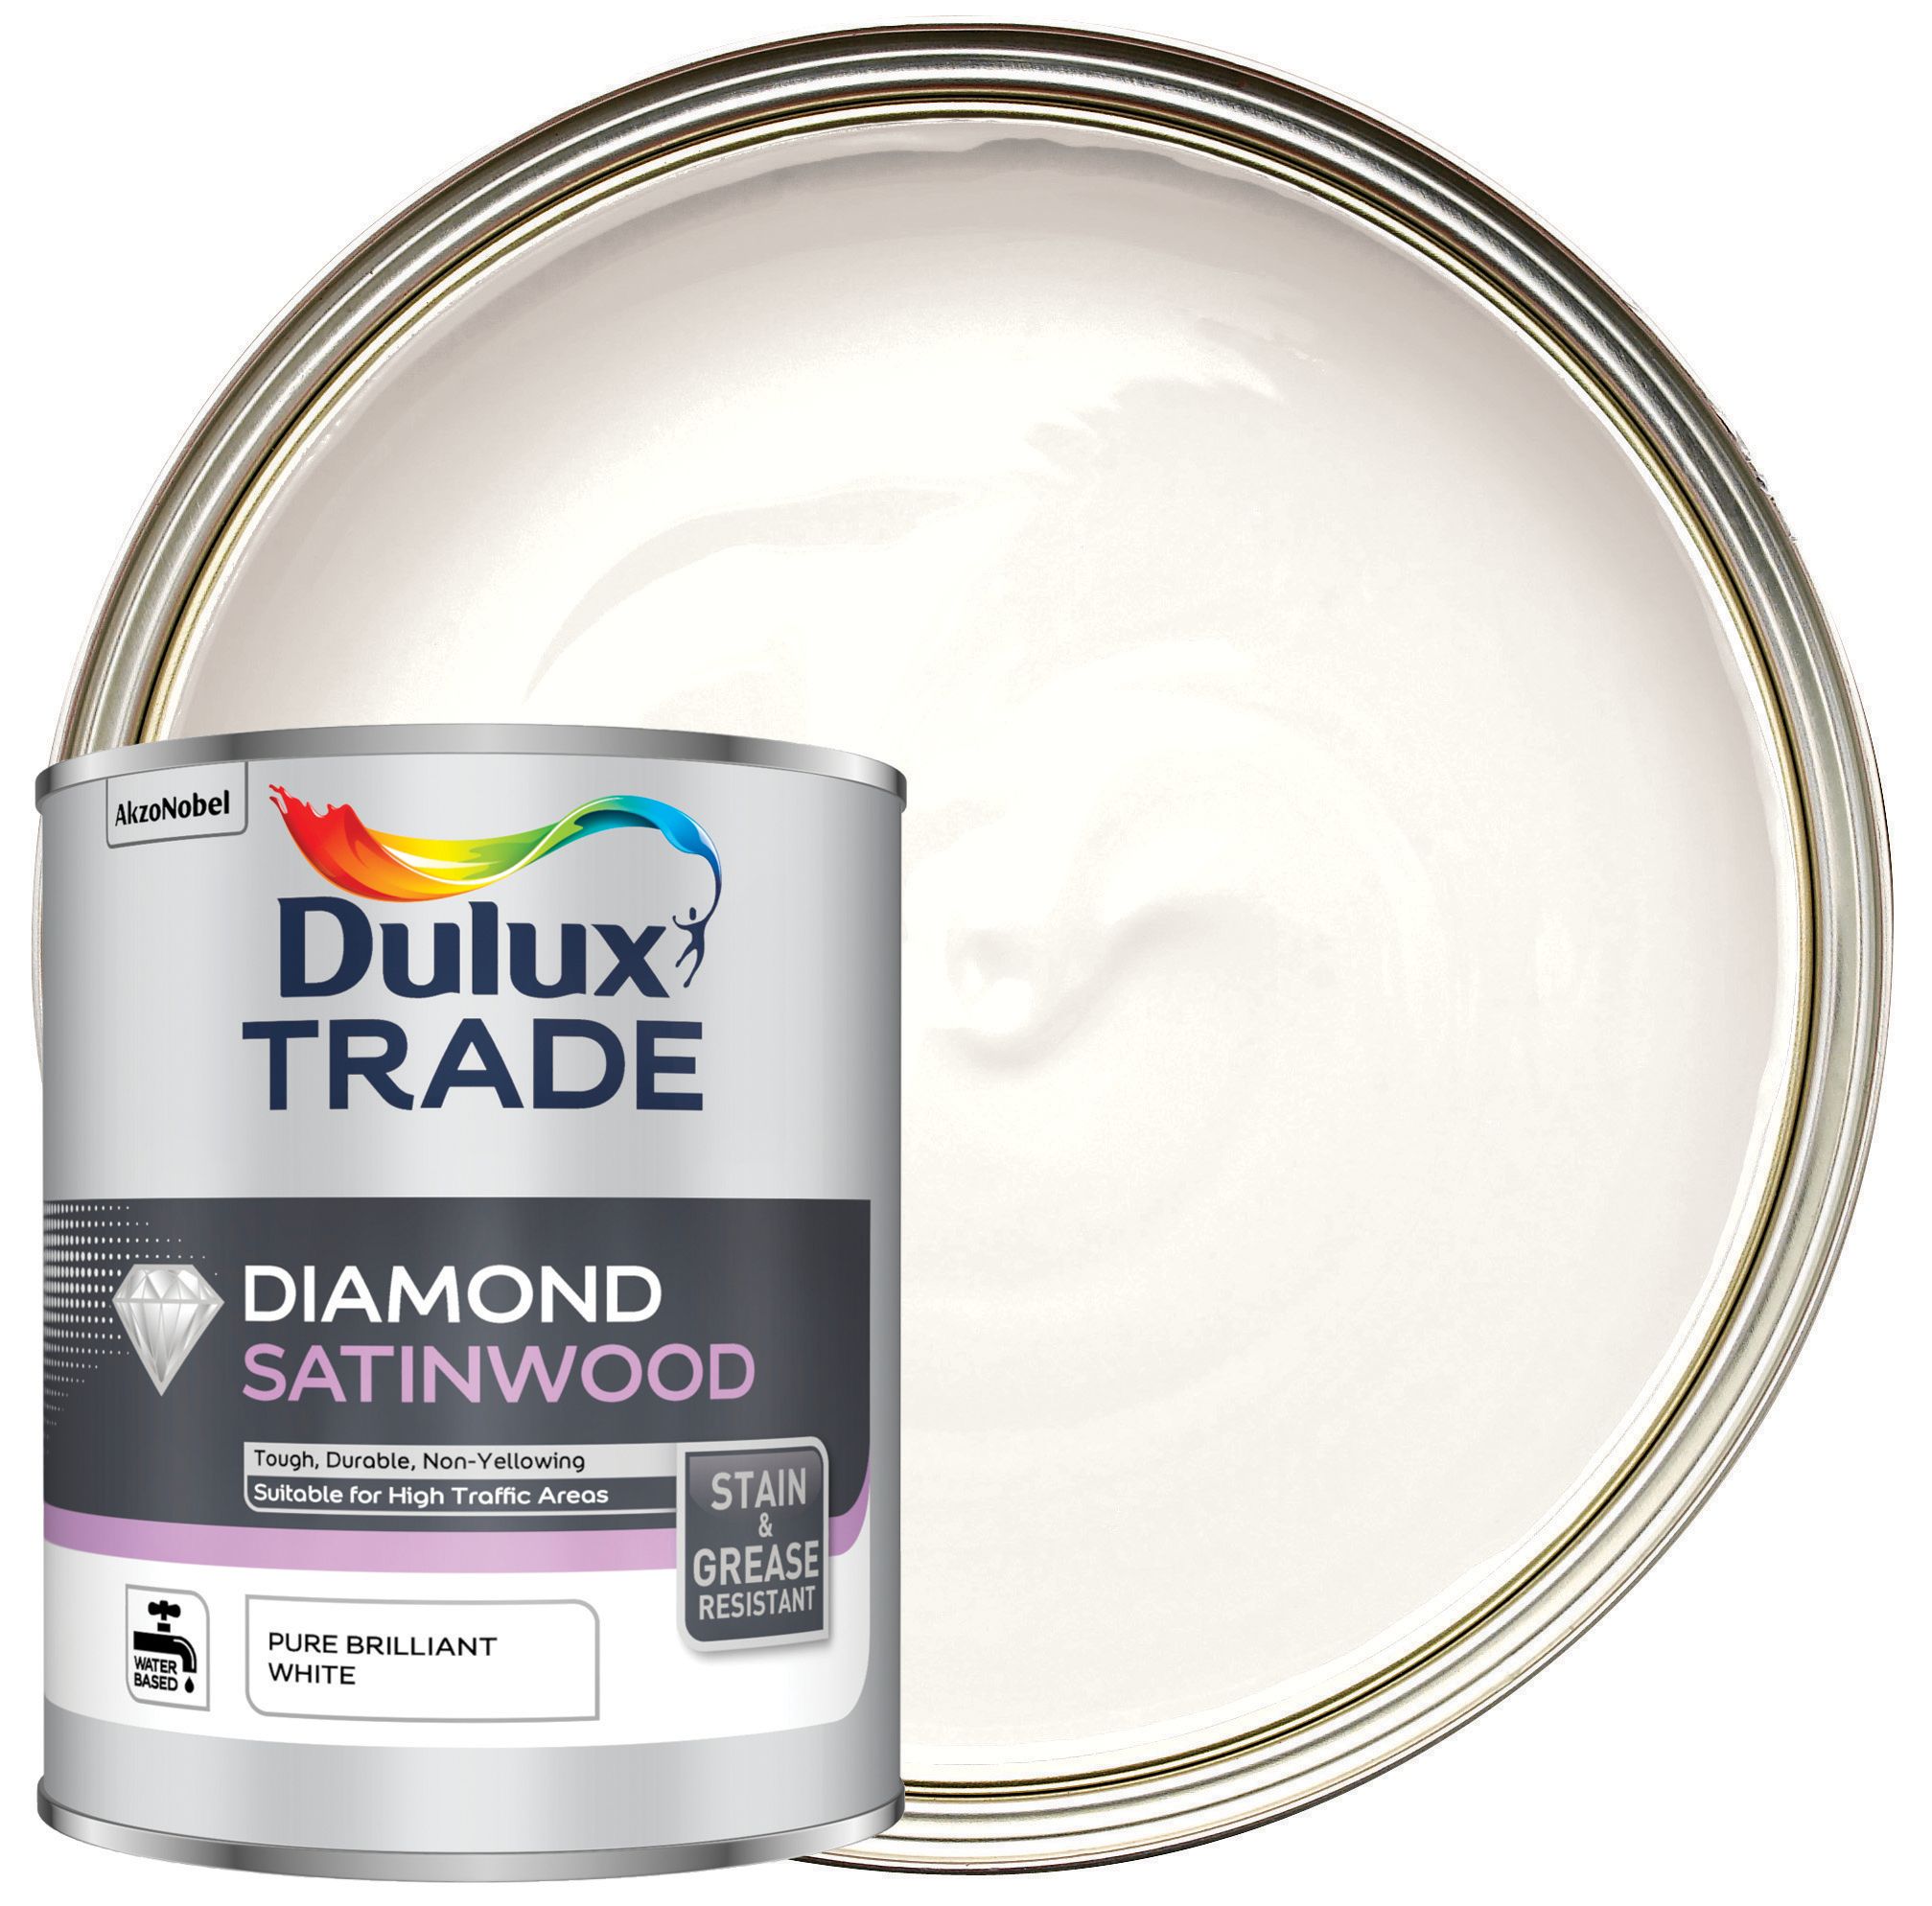 Image of Dulux Trade Diamond Satinwood Paint - Pure Brilliant White - 1L